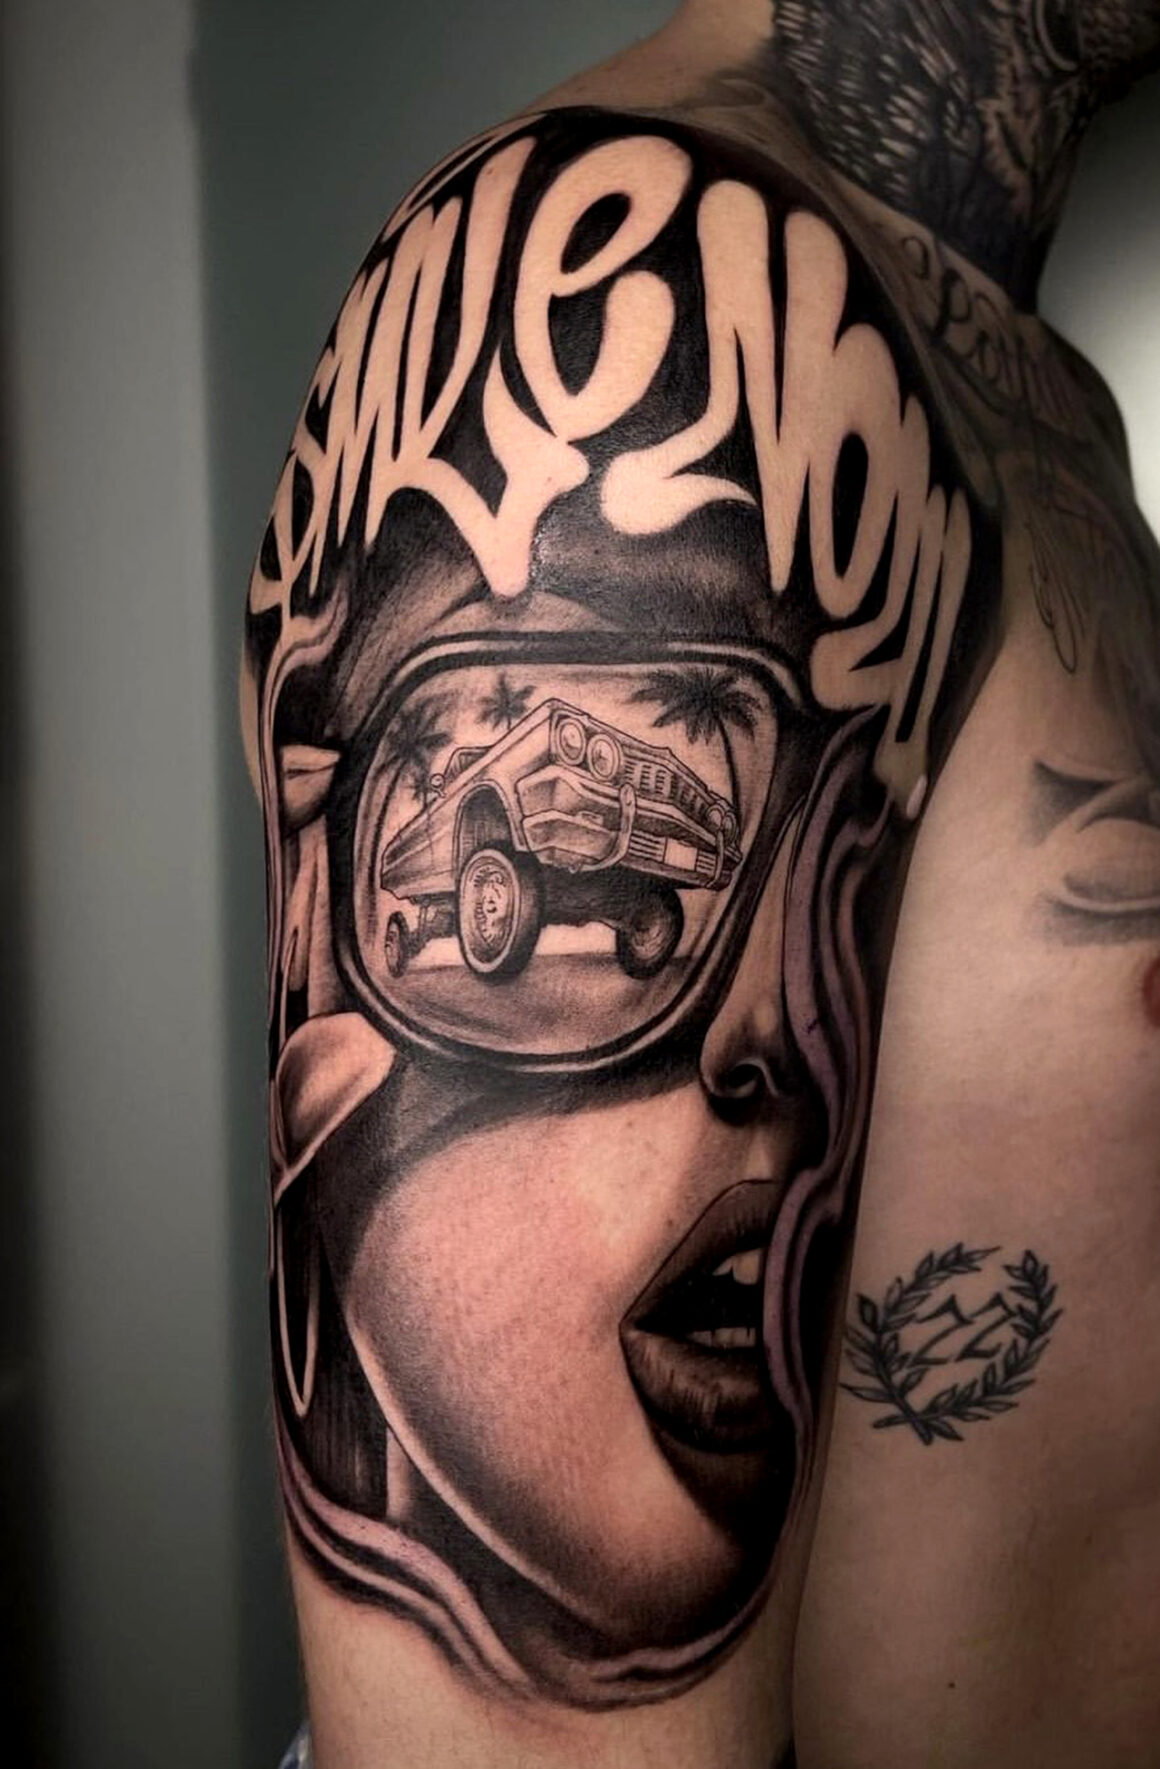 Tattoo by Joe Damiano, @joedamianotattoo